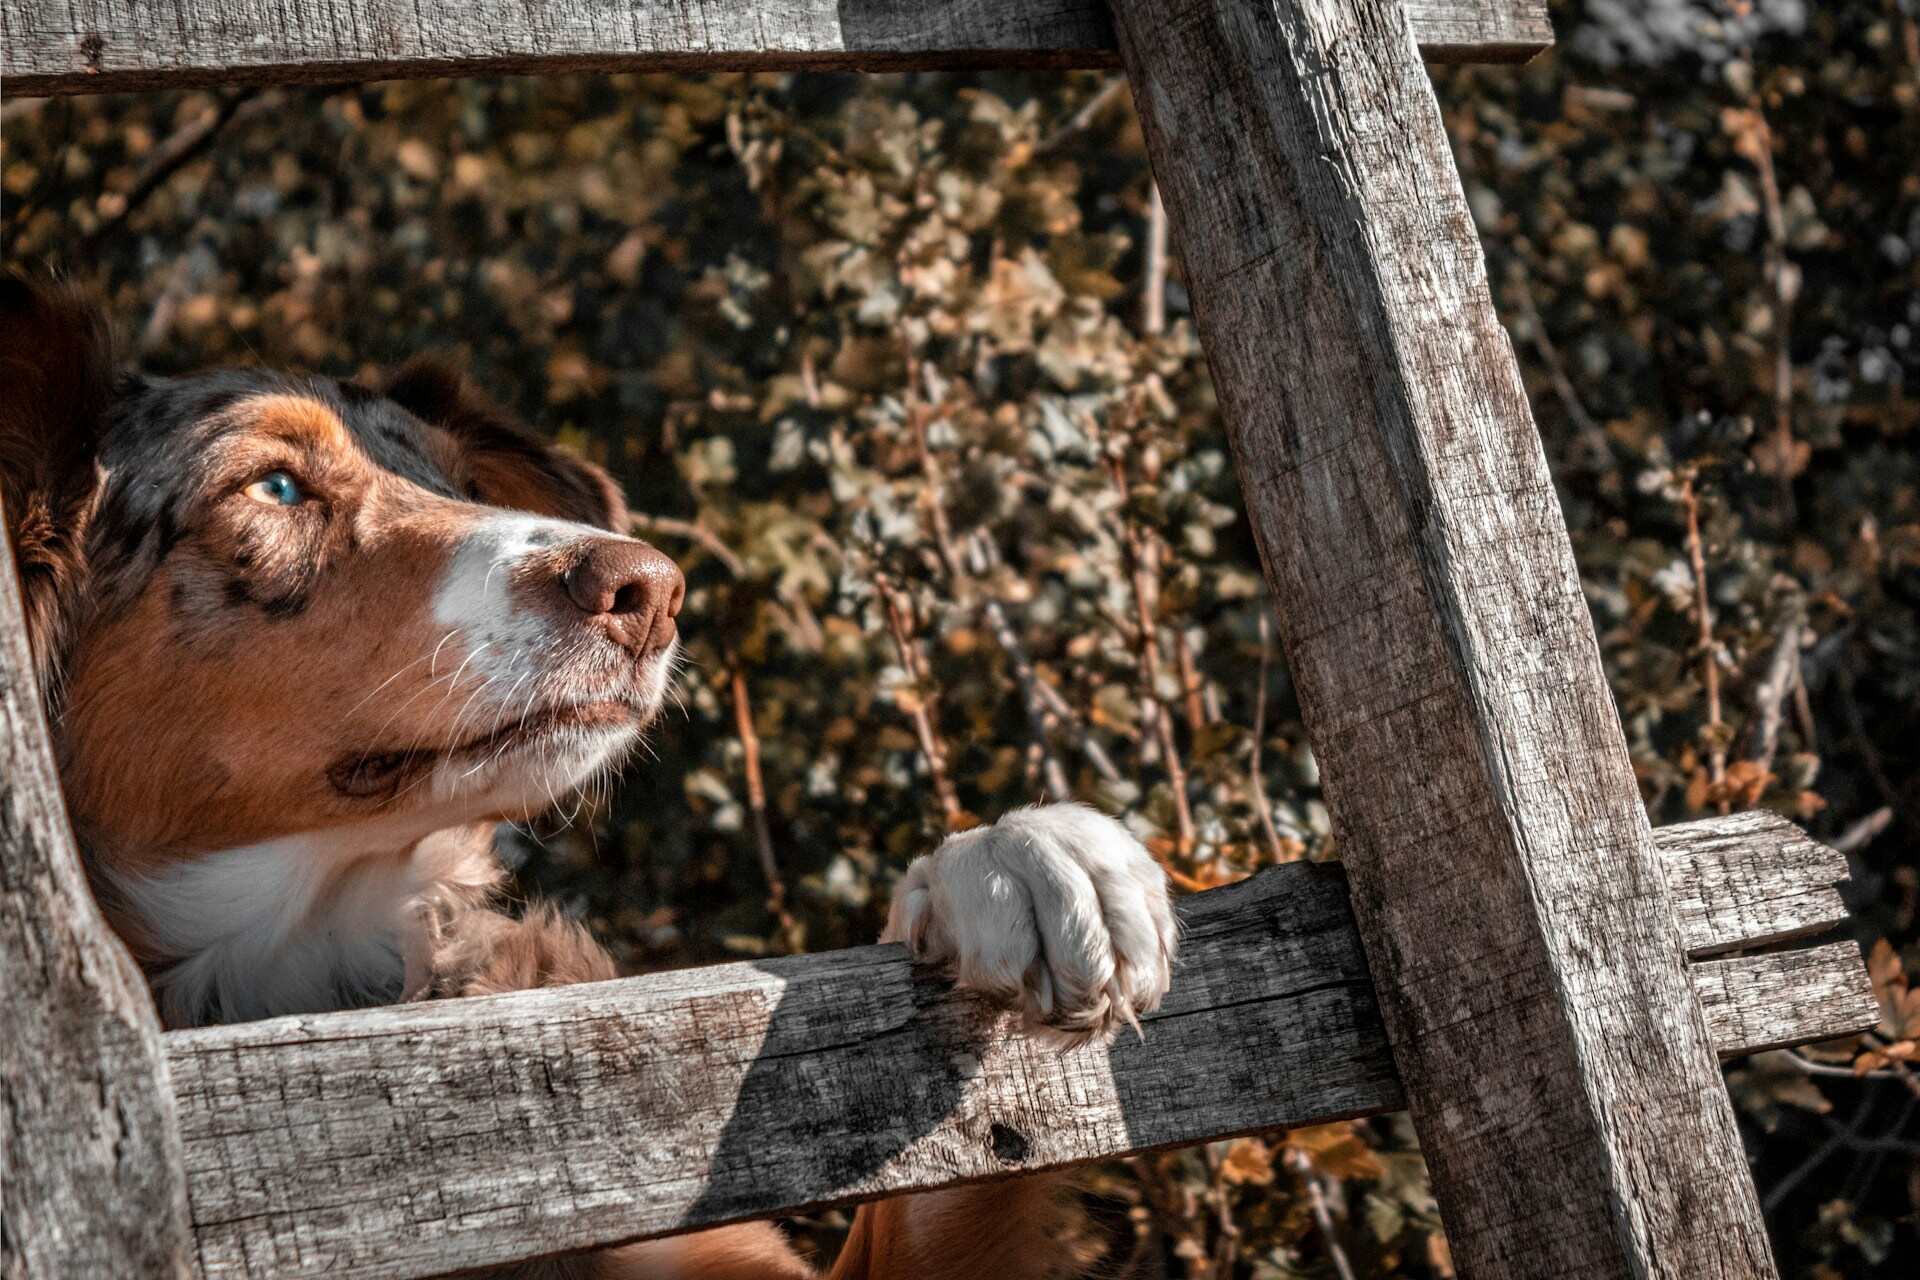 A dog peeking through a wooden fence